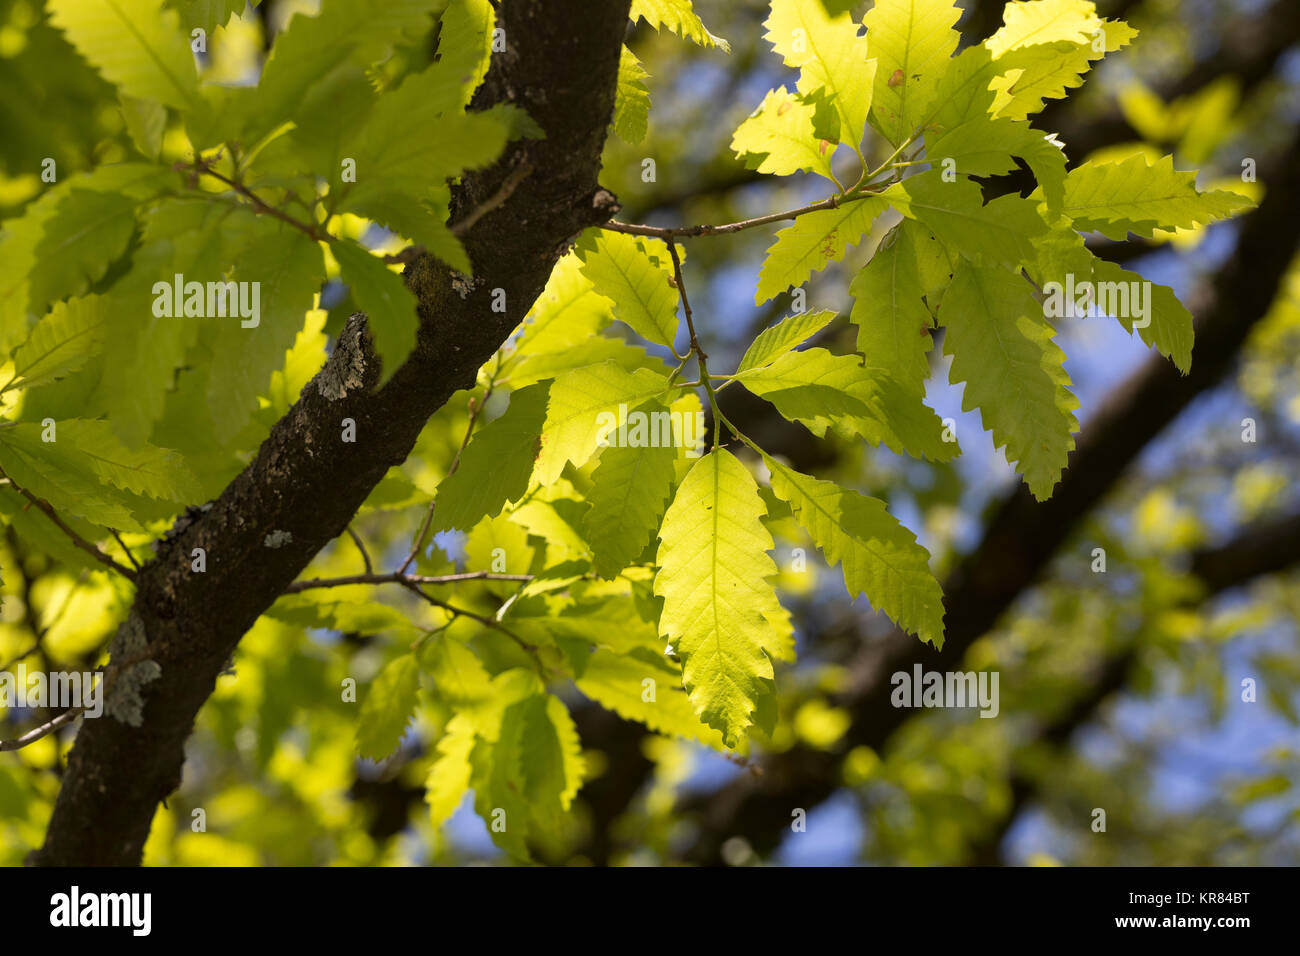 Libanon-Eiche, Libanoneiche, Quercus libani, Quercus vesca, Líbano, roble, Le chêne du Liban Foto de stock